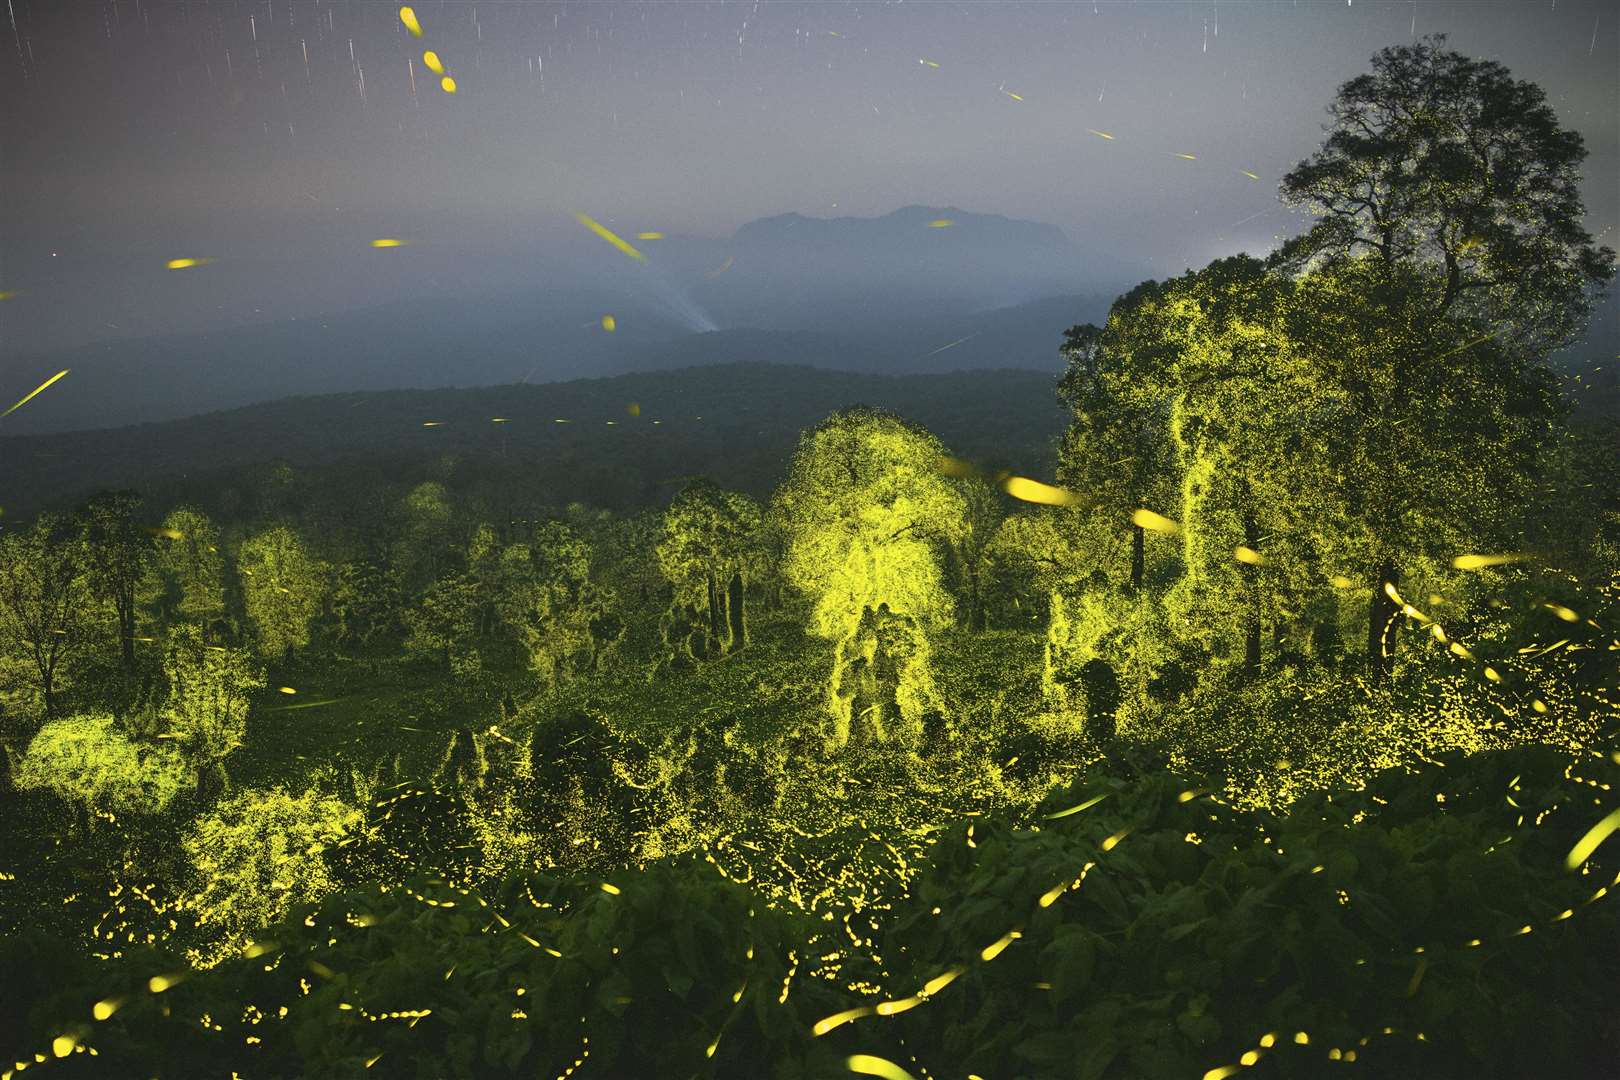 The bioluminescence of fireflies was captured with long exposure camera shots (Sriram Murali/Wildlife Photographer of the Year/PA)